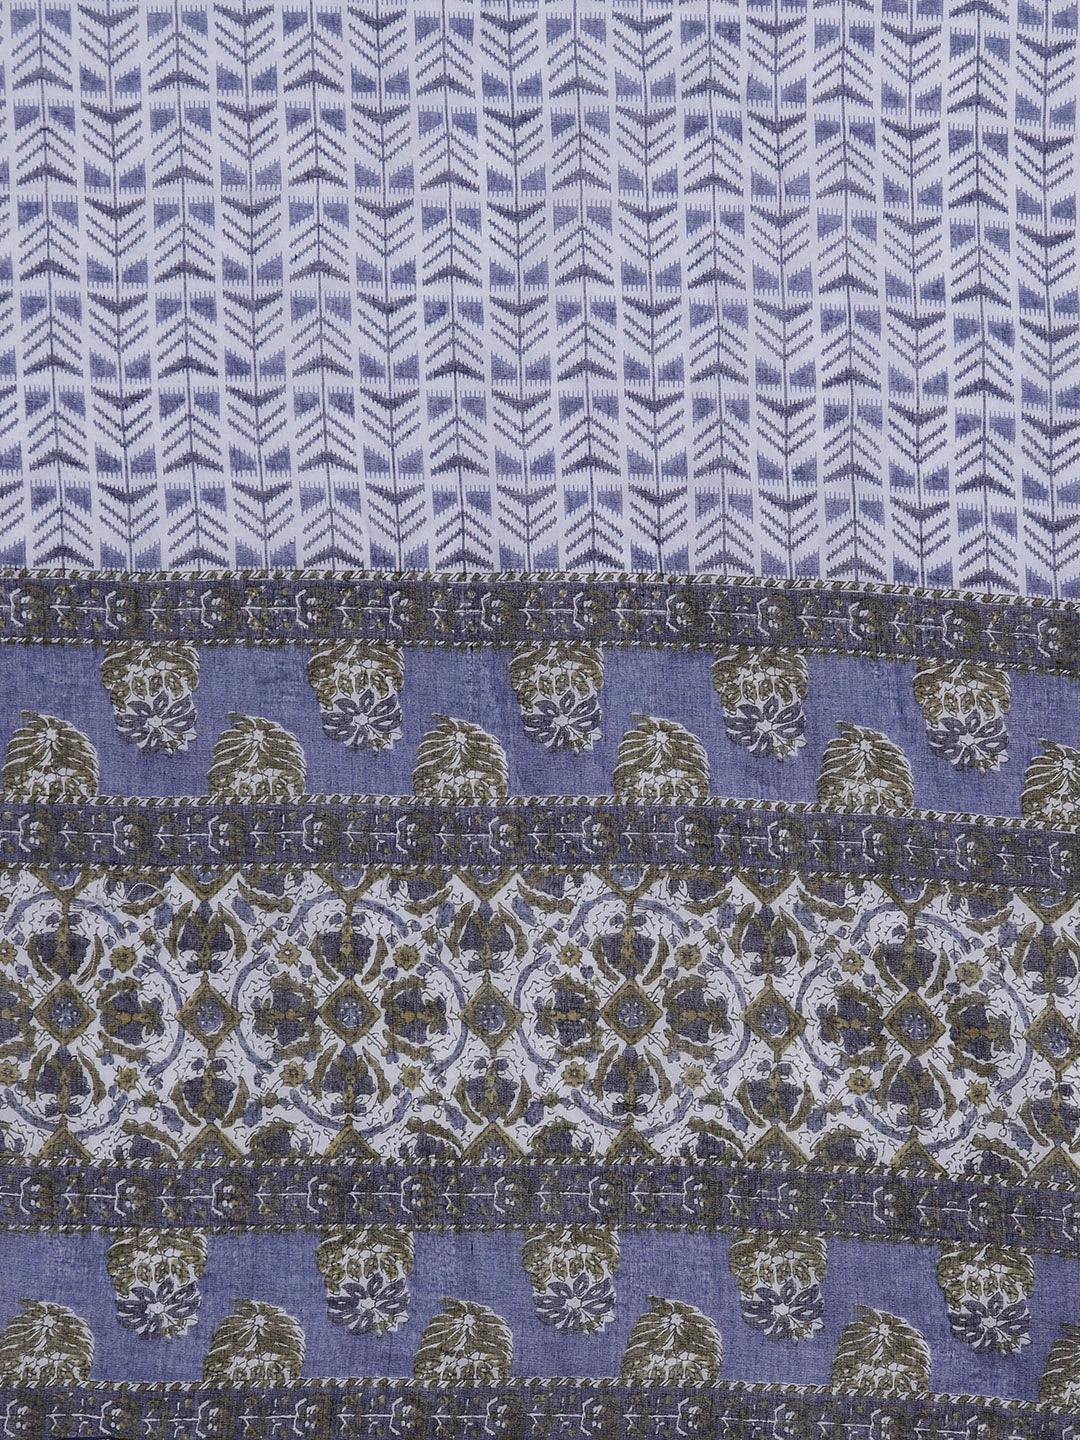 Blue Printed Cotton Straight Kurta With Trousers & Dupatta - Libas